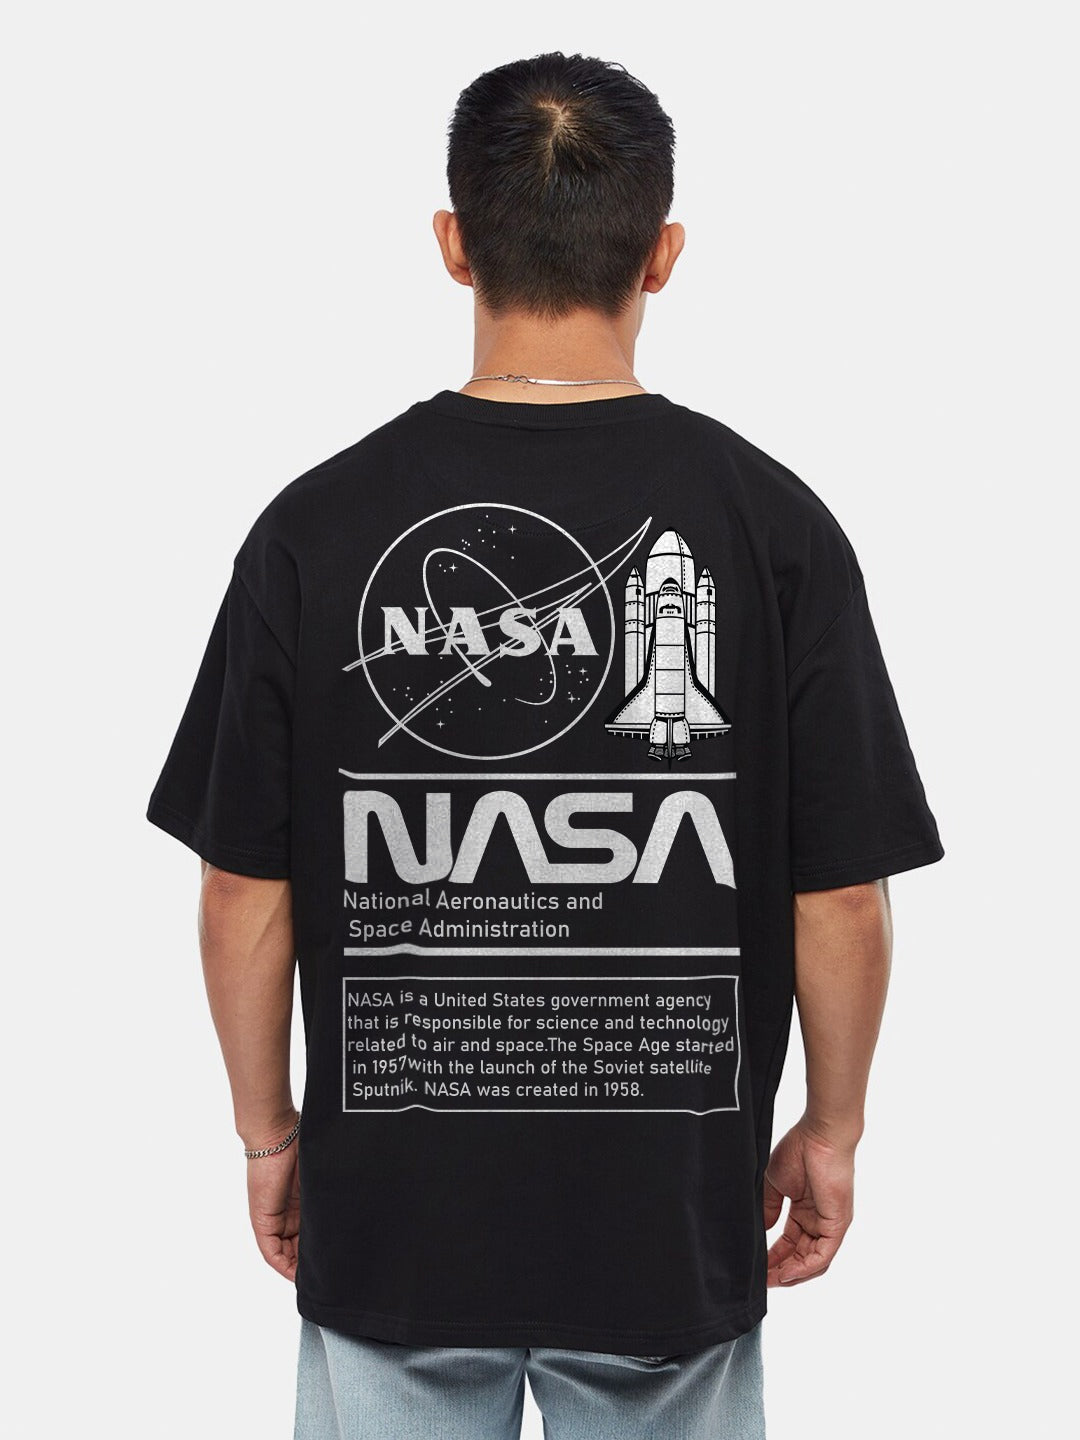 Nasa Oversized T-Shirt